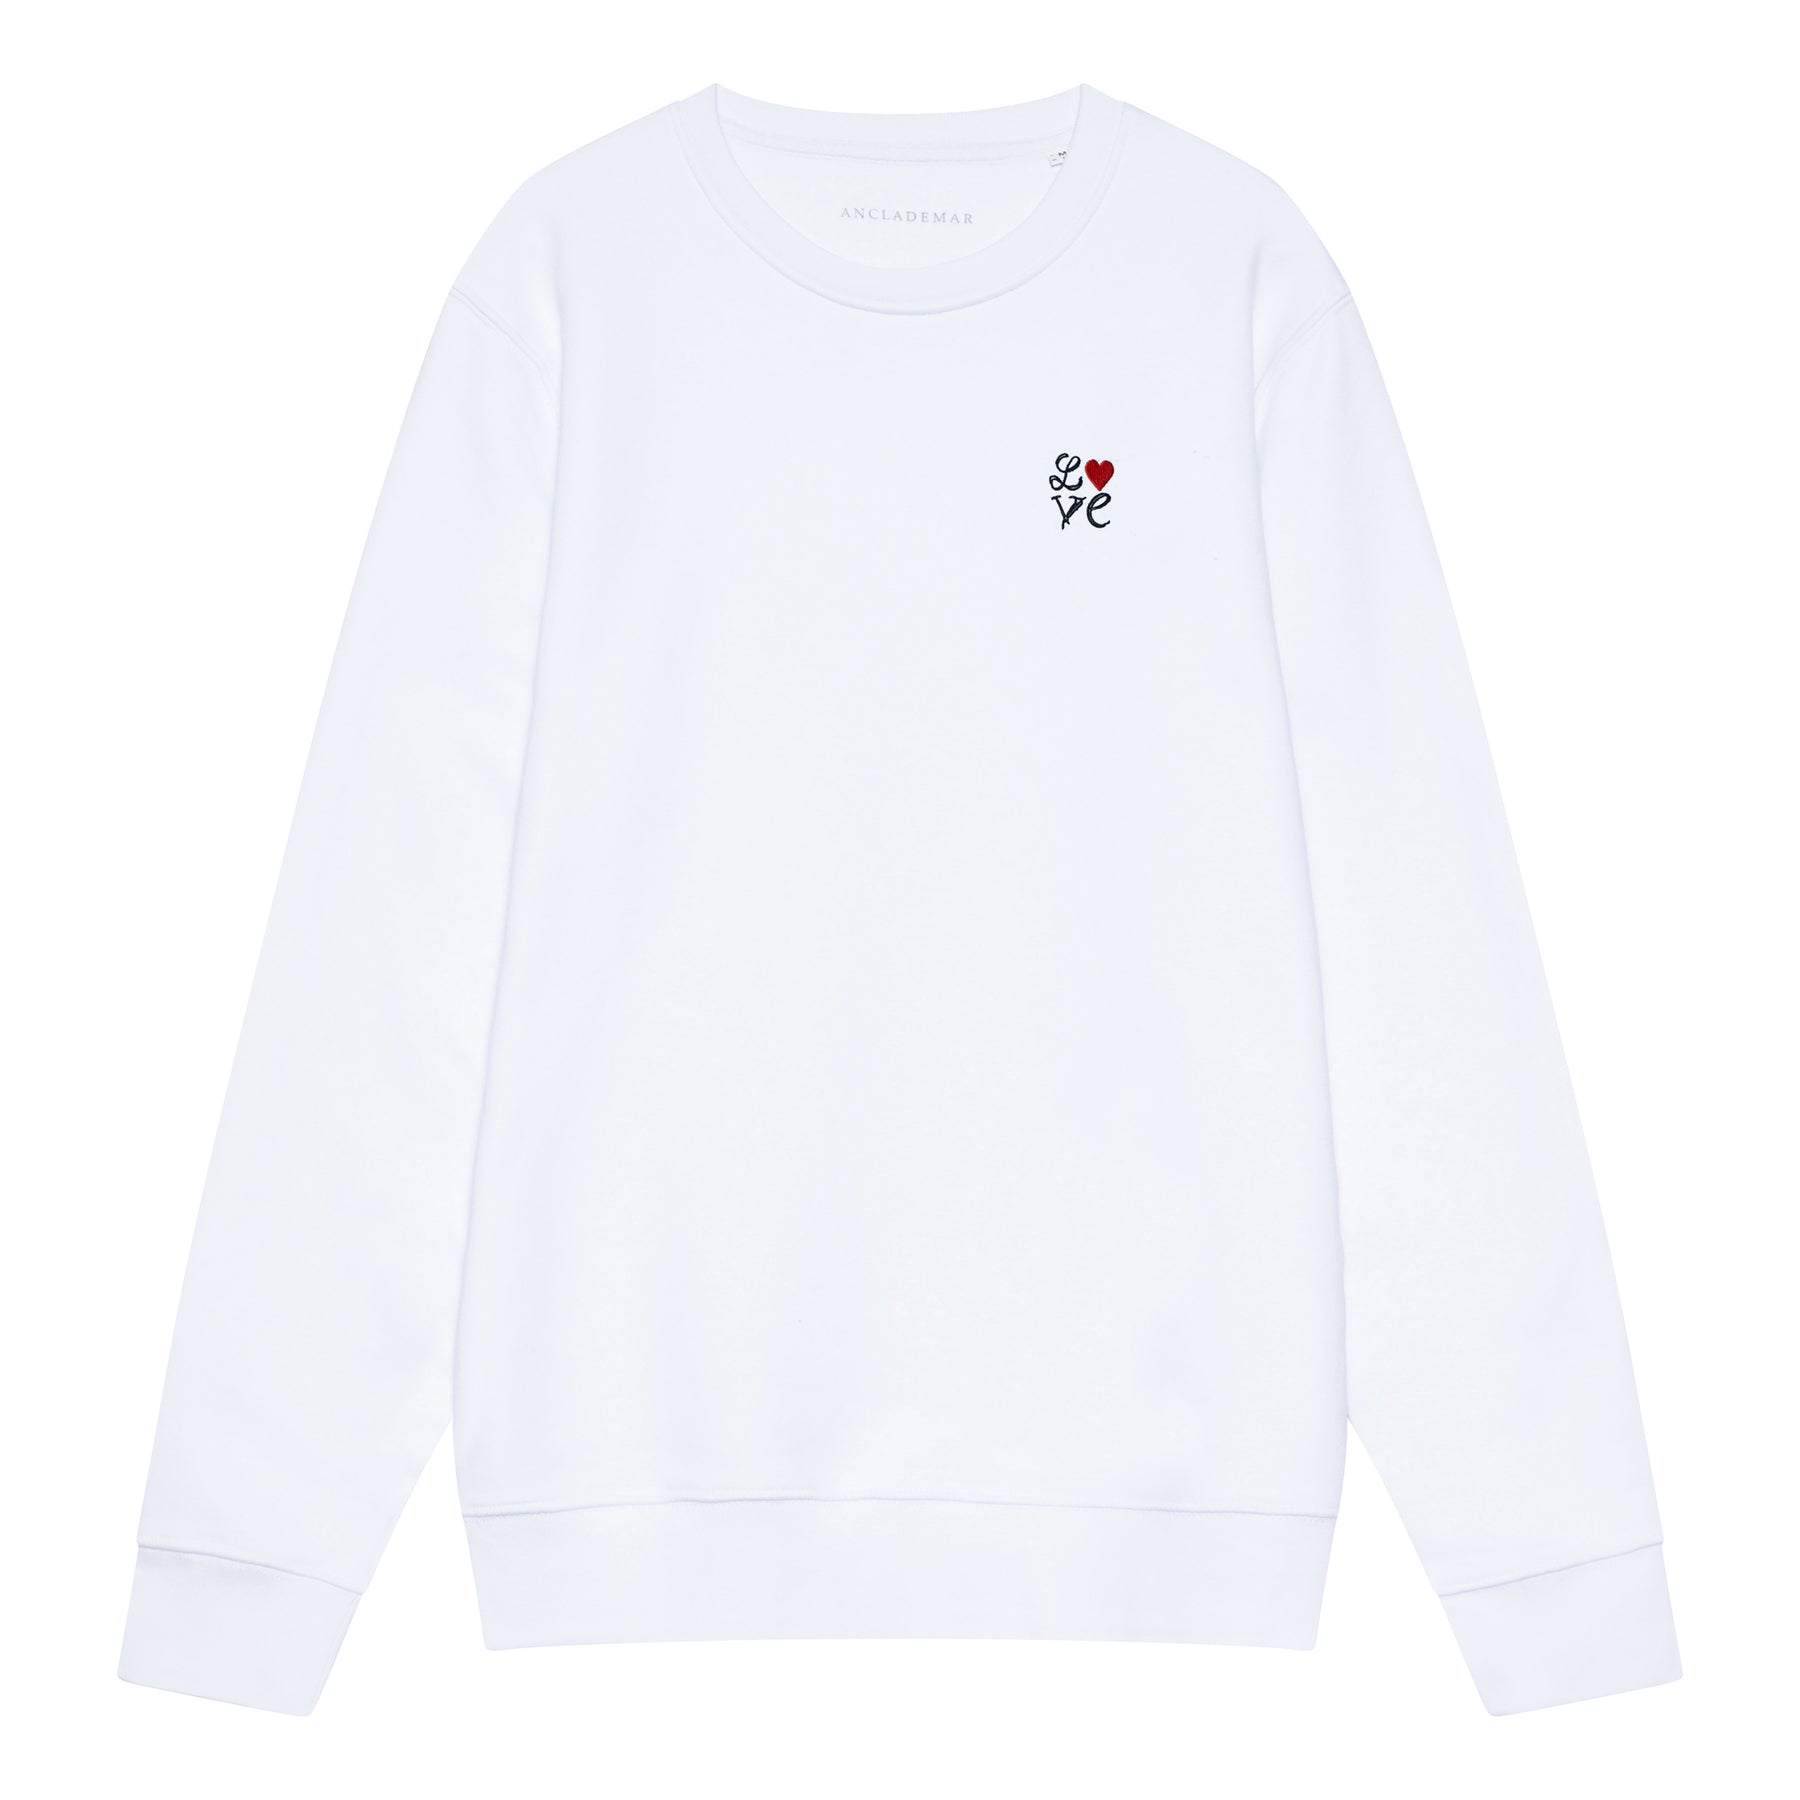 LOVE Embroidered White Sweatshirt